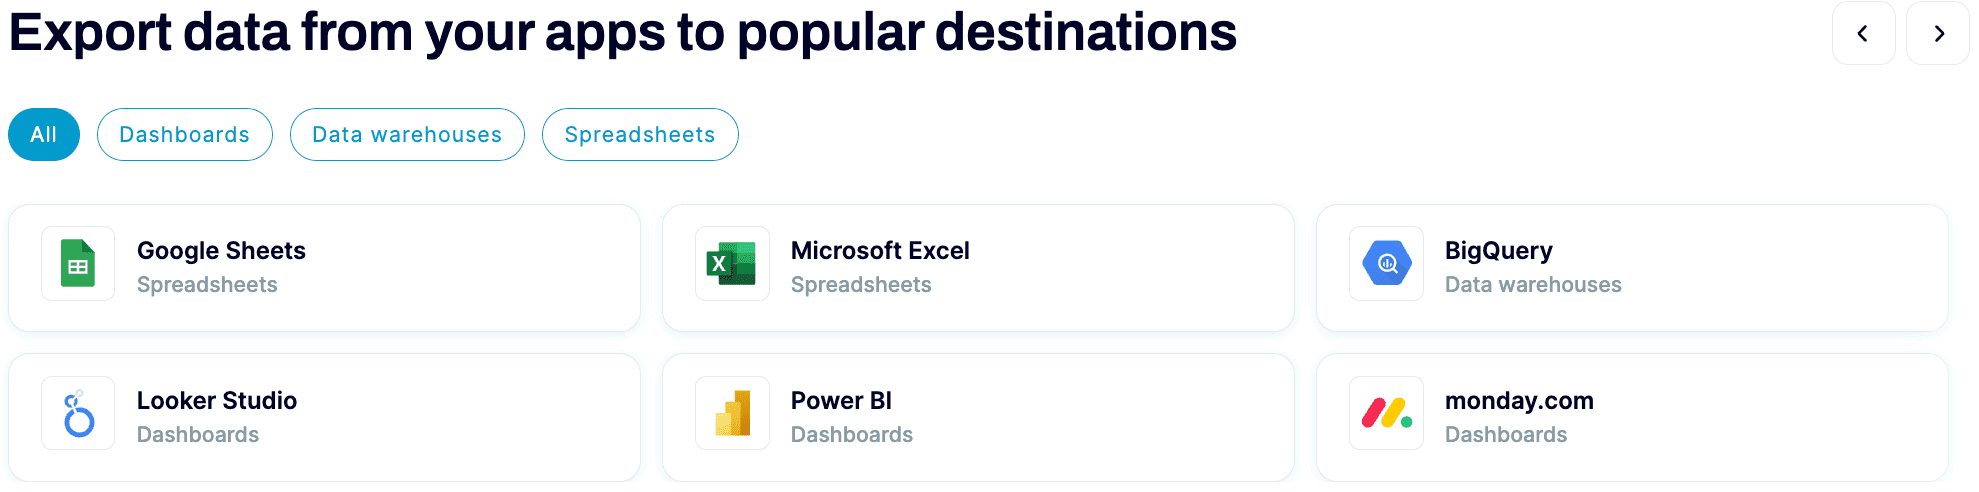 popular destinations coupler.io